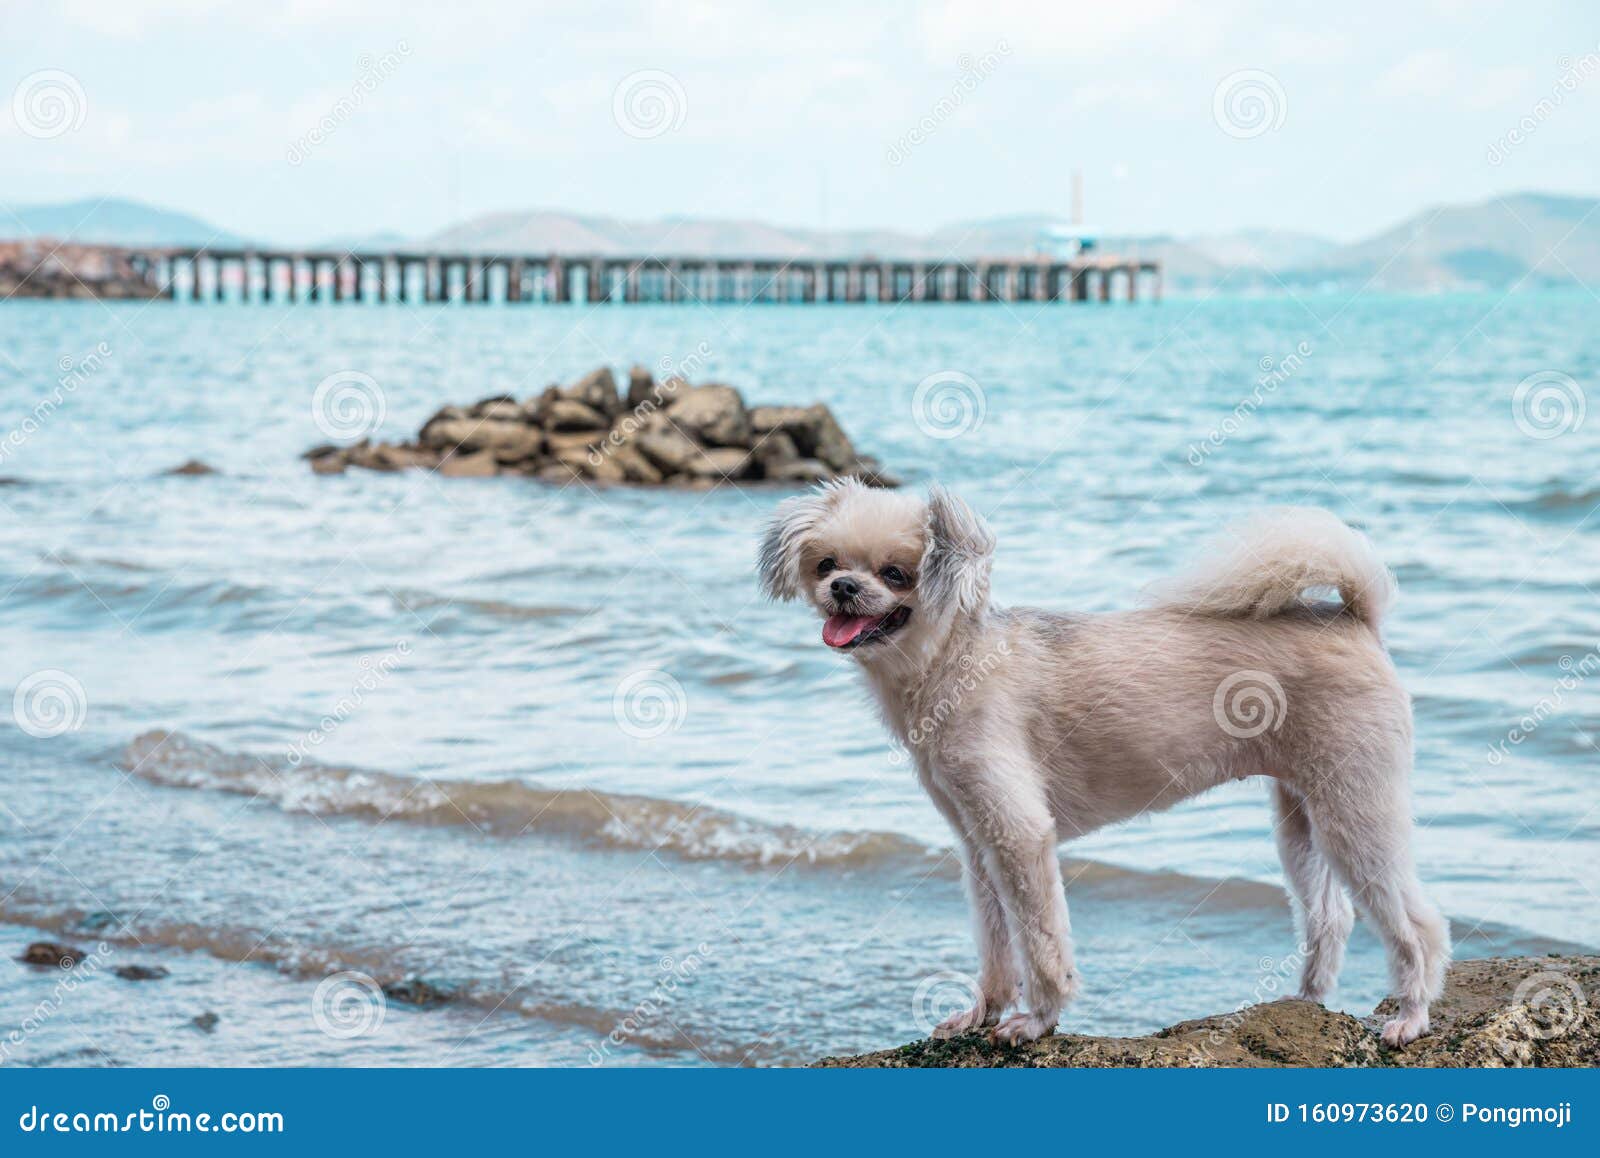 Dog Happy Fun On Rocky Beach When Travel At Sea Stock